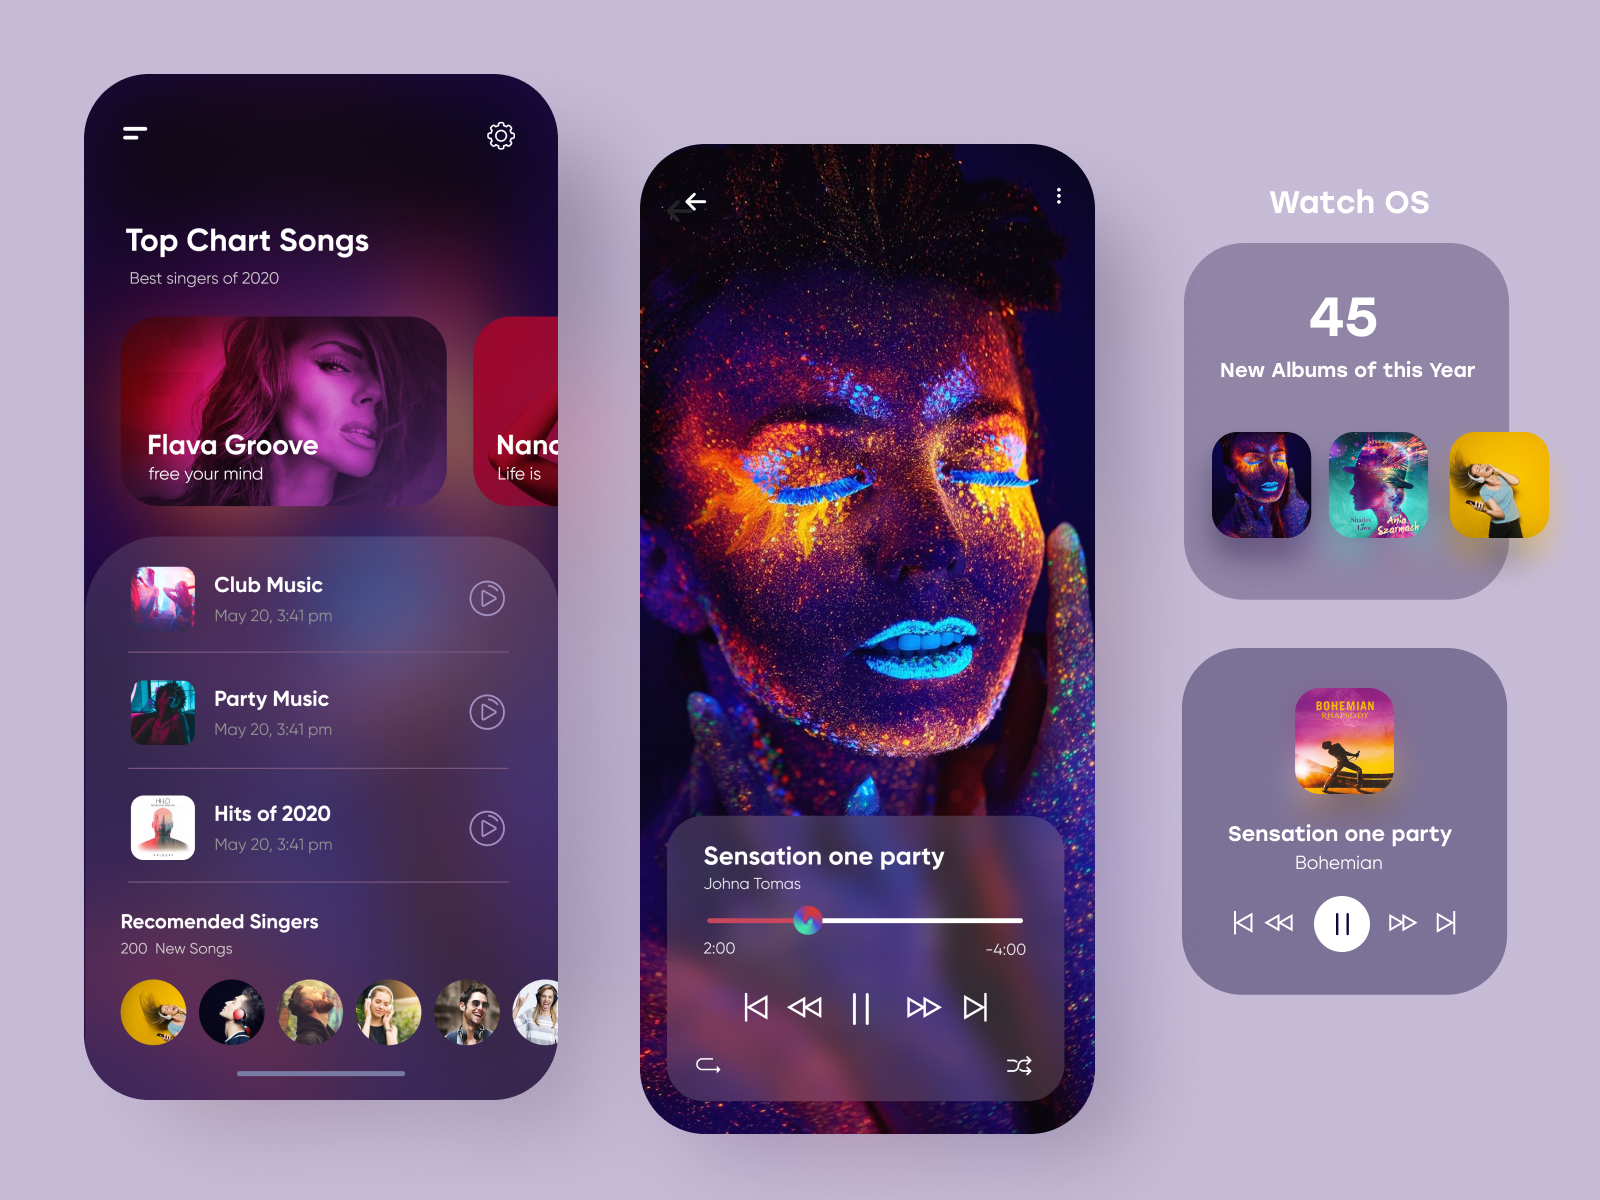 Music Mobile App Ux Ui Design By Ghulam Rasool 🚀 For Upnow Studio On